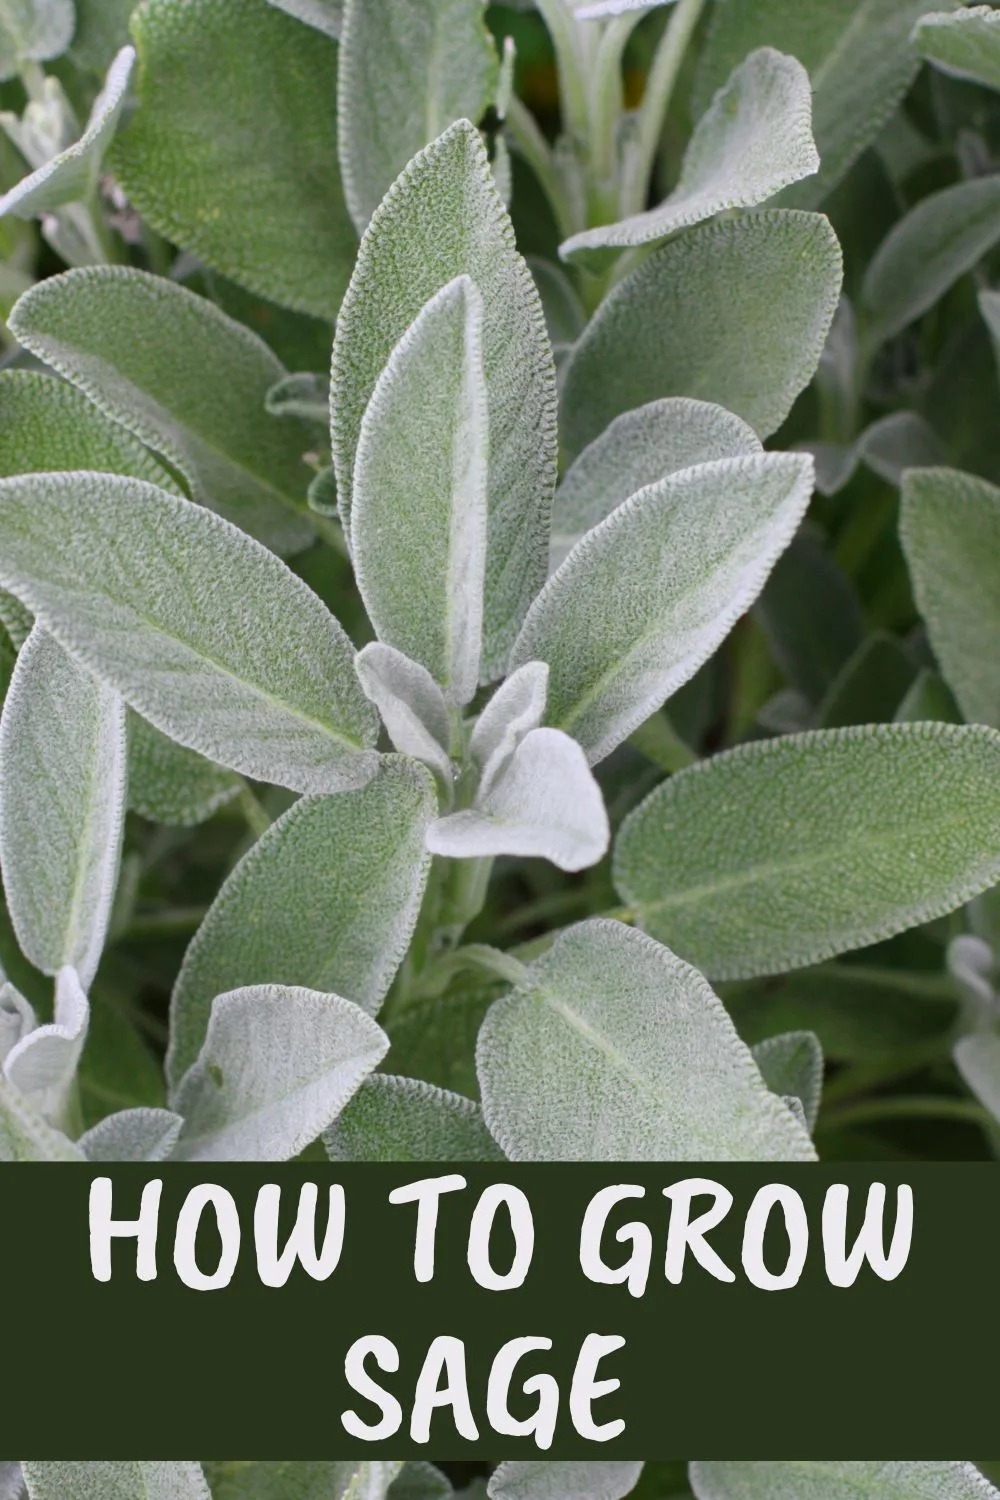 How to grow sage.